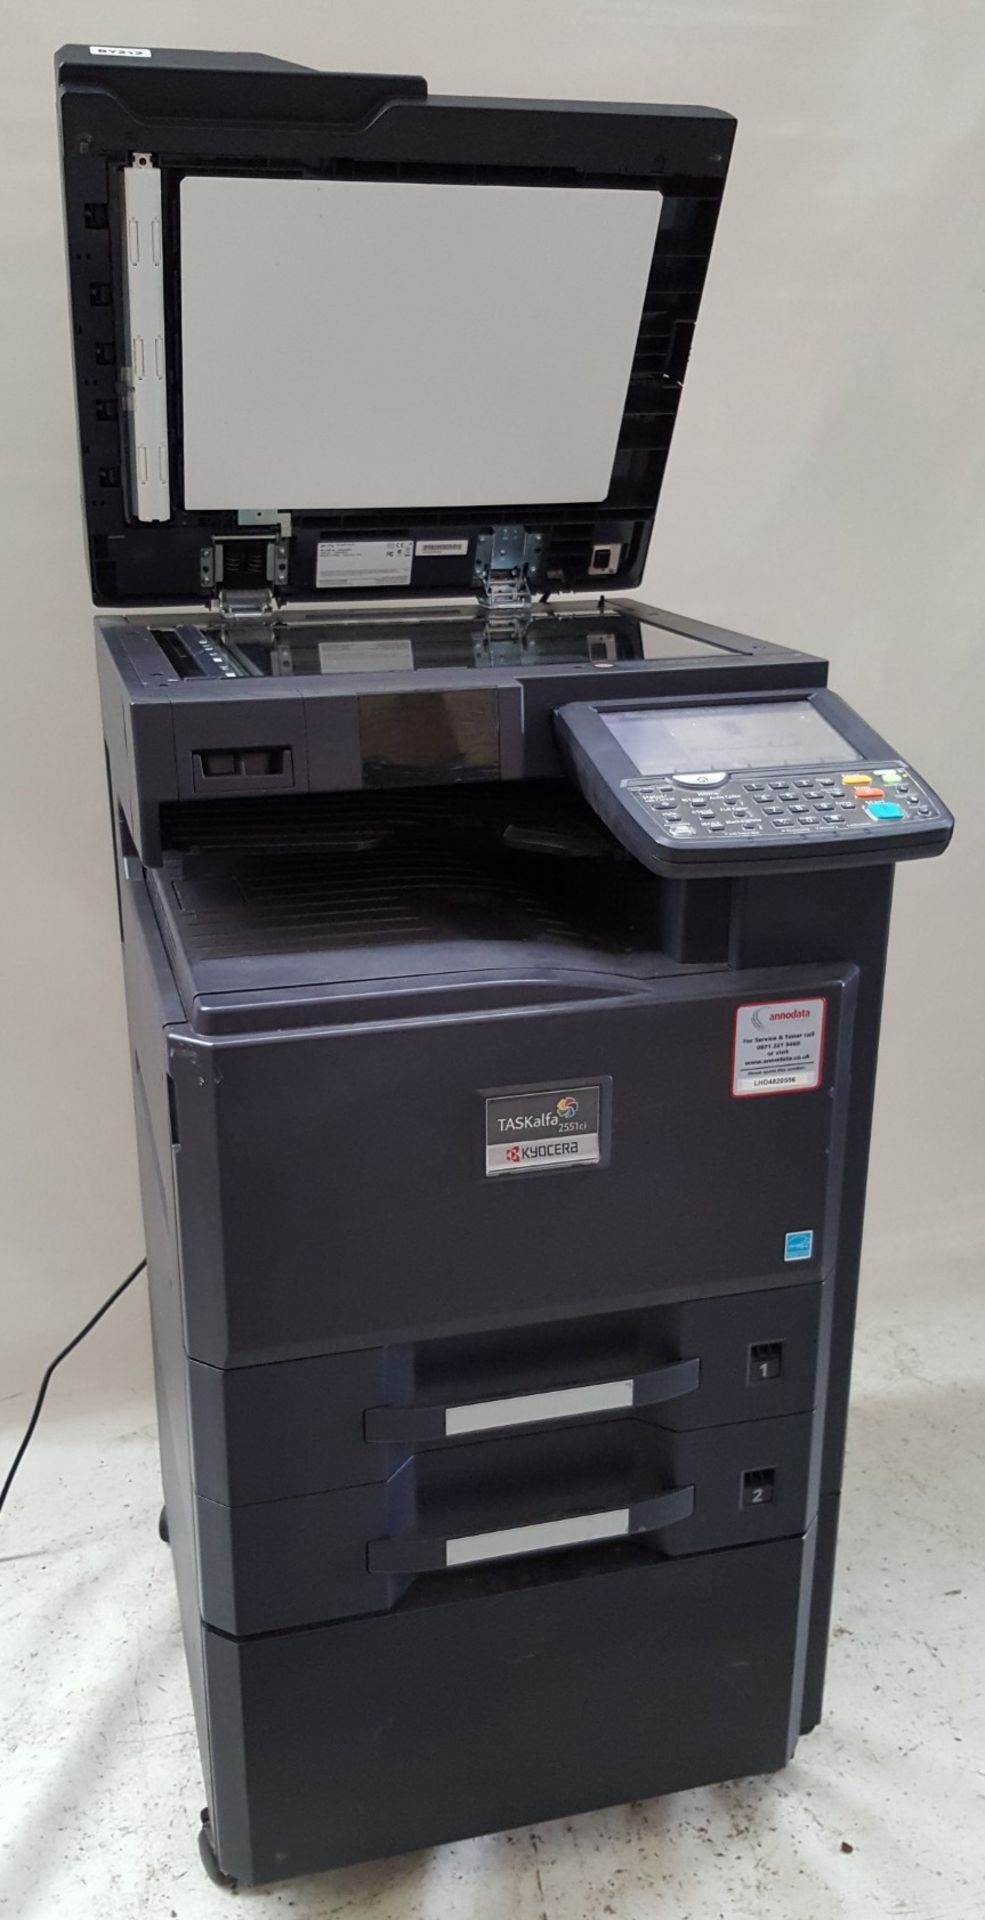 1 x KYOCERA TASKALFA 2551ci Multifunction Office Printer - Ref BY212 - Image 3 of 5